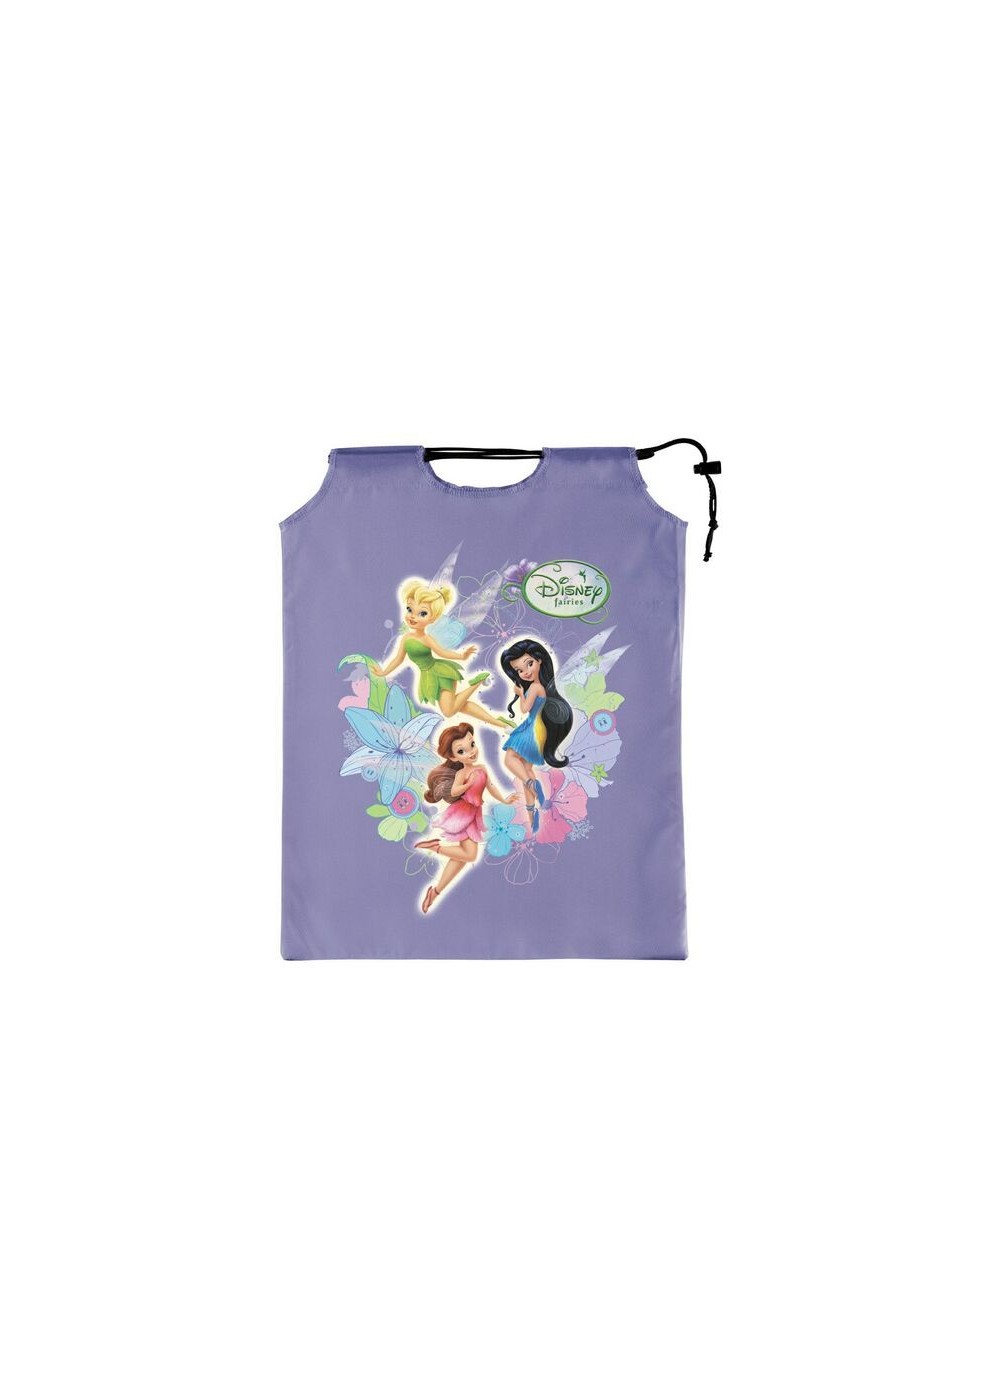 Disney Fairies Treat Bag Sack Set